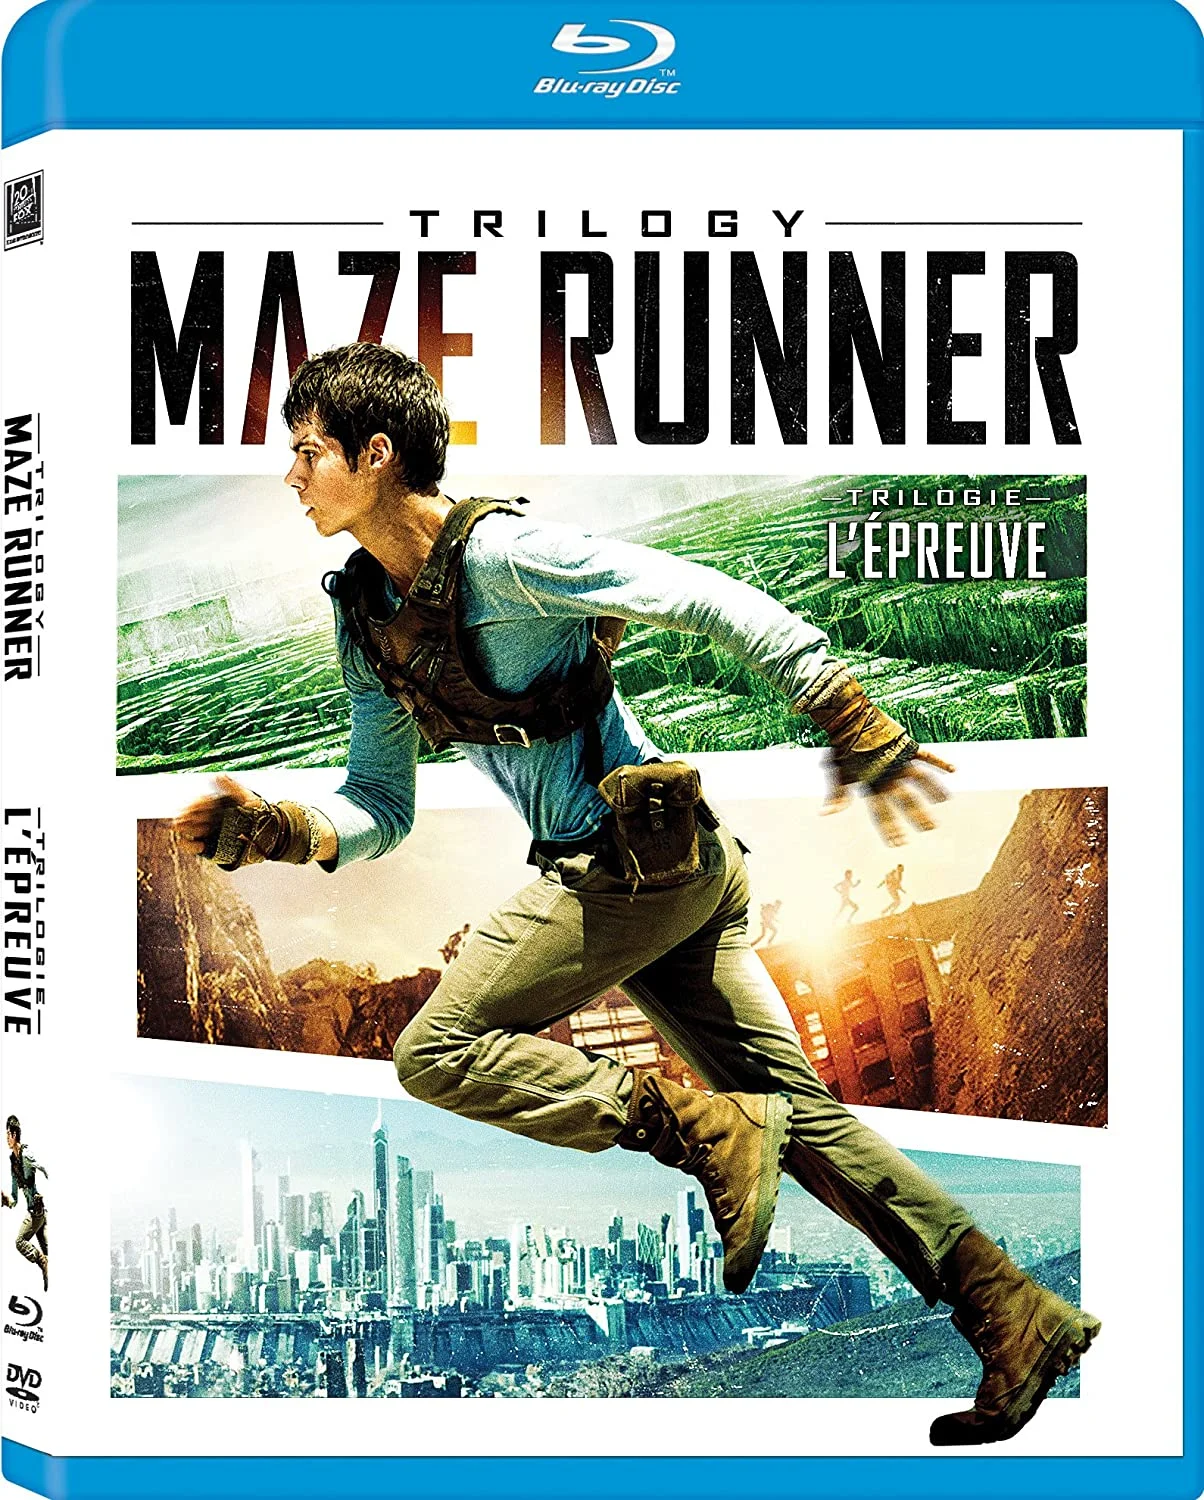 Maze Runner: Trilogy (Blu-ray/DVD Combo) on MovieShack